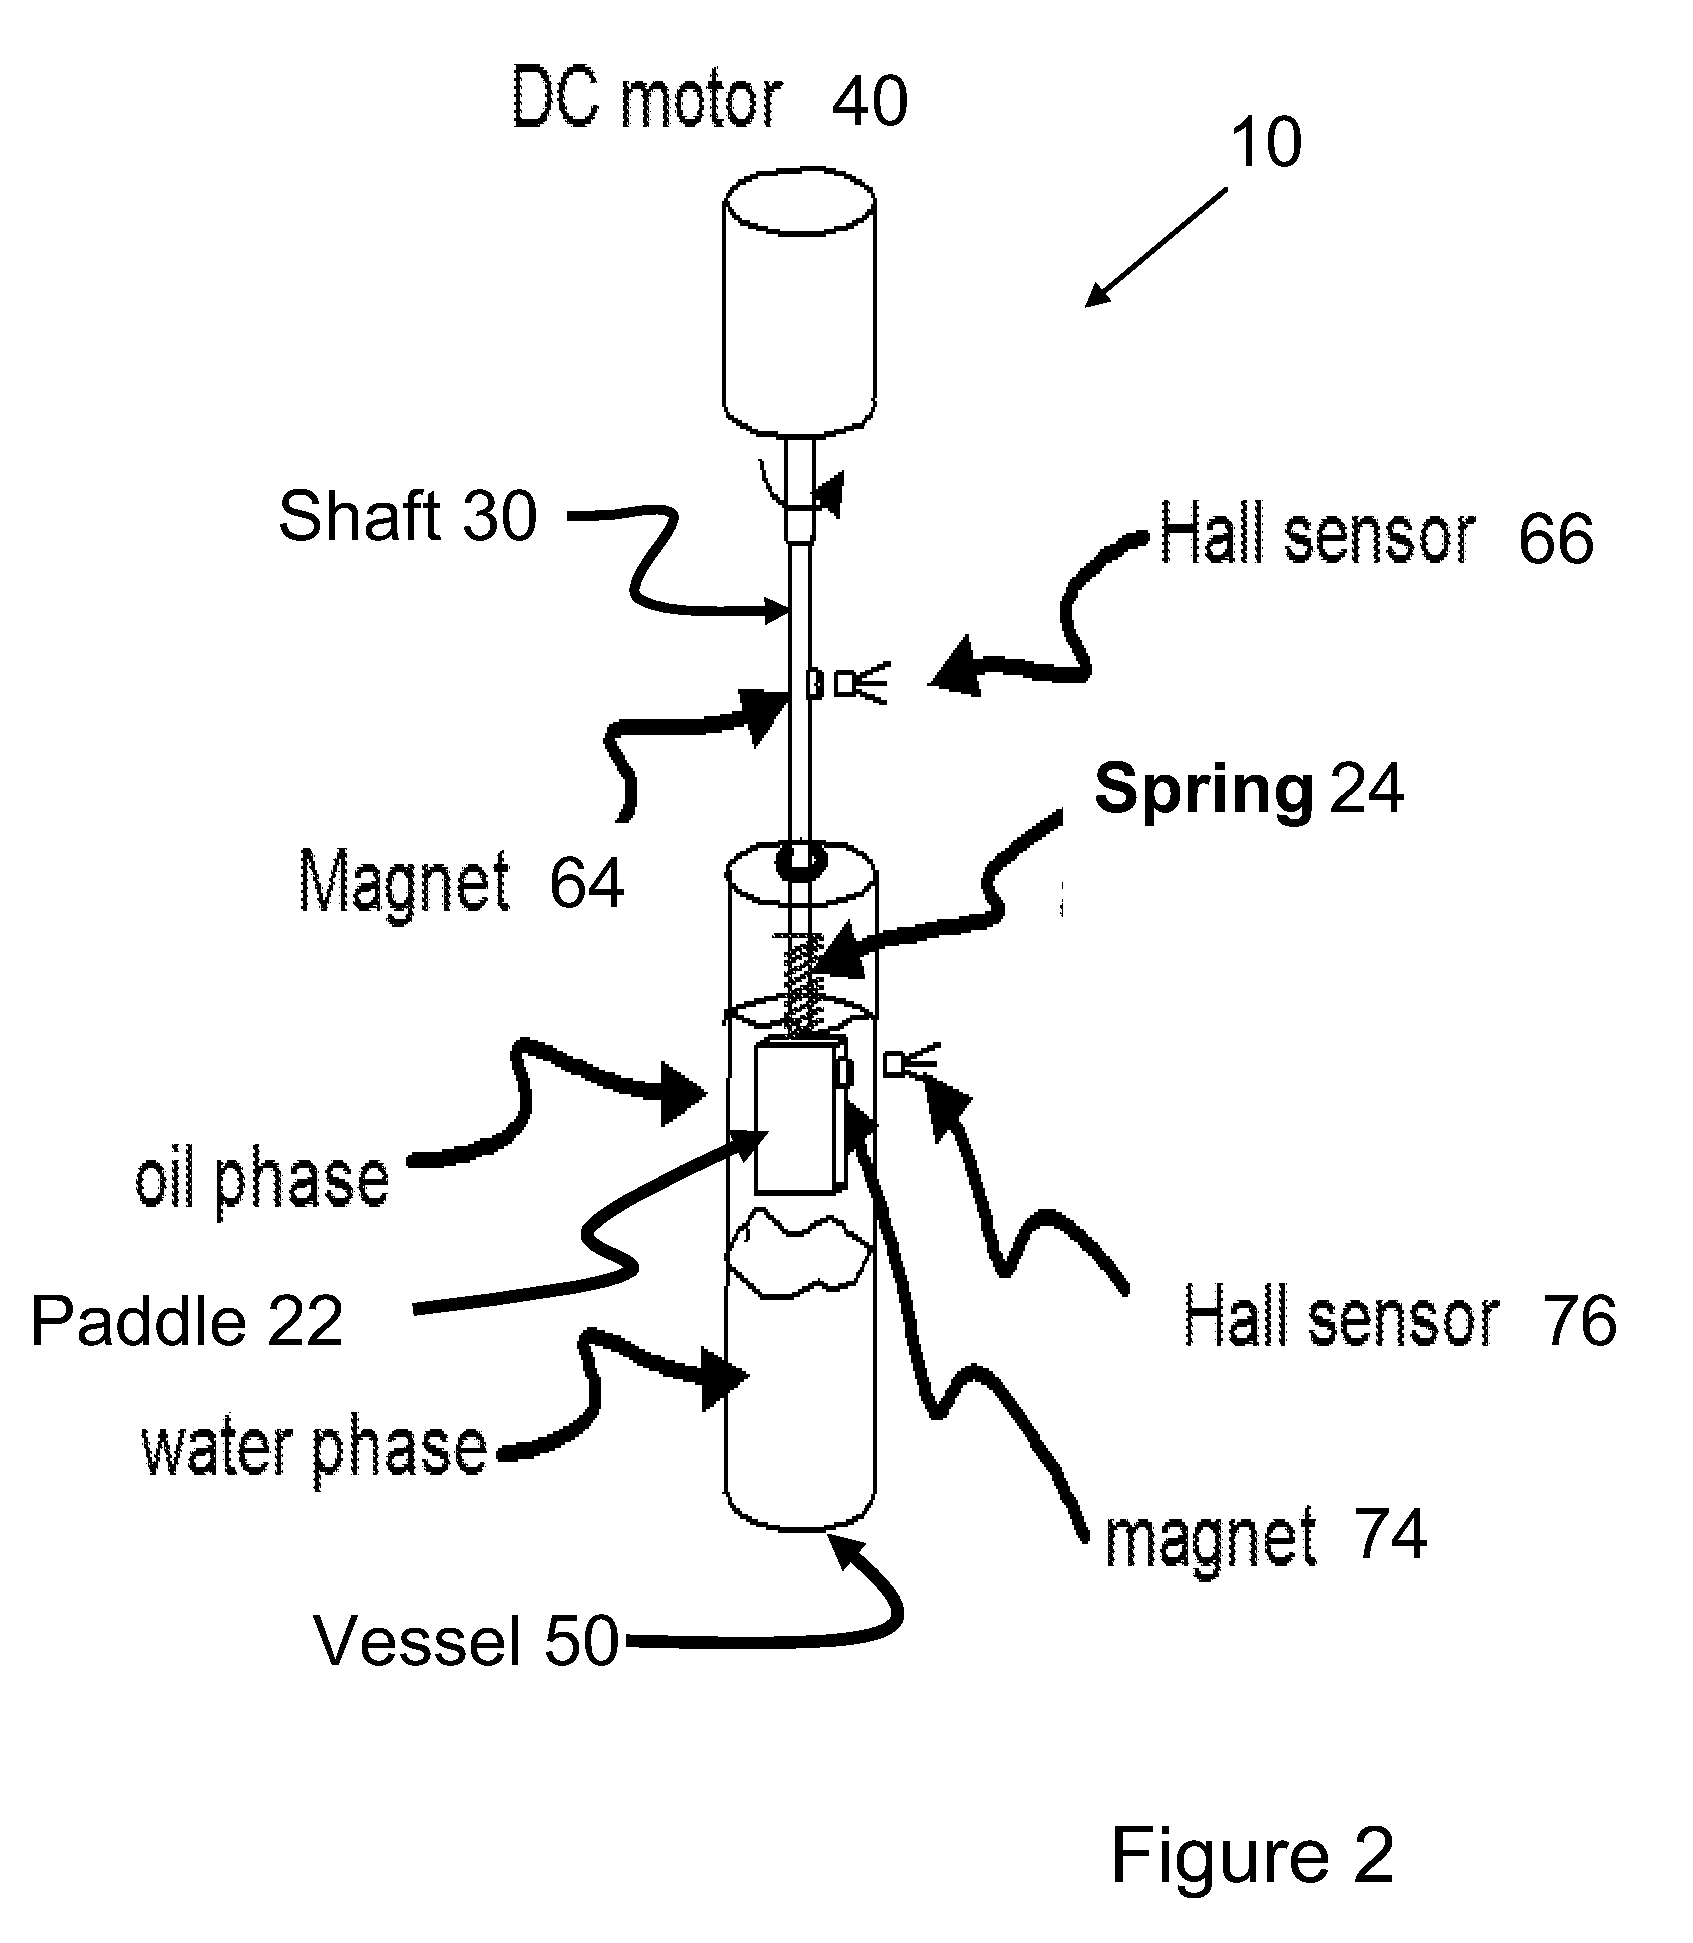 Apparatus for measurement of in-situ viscosity